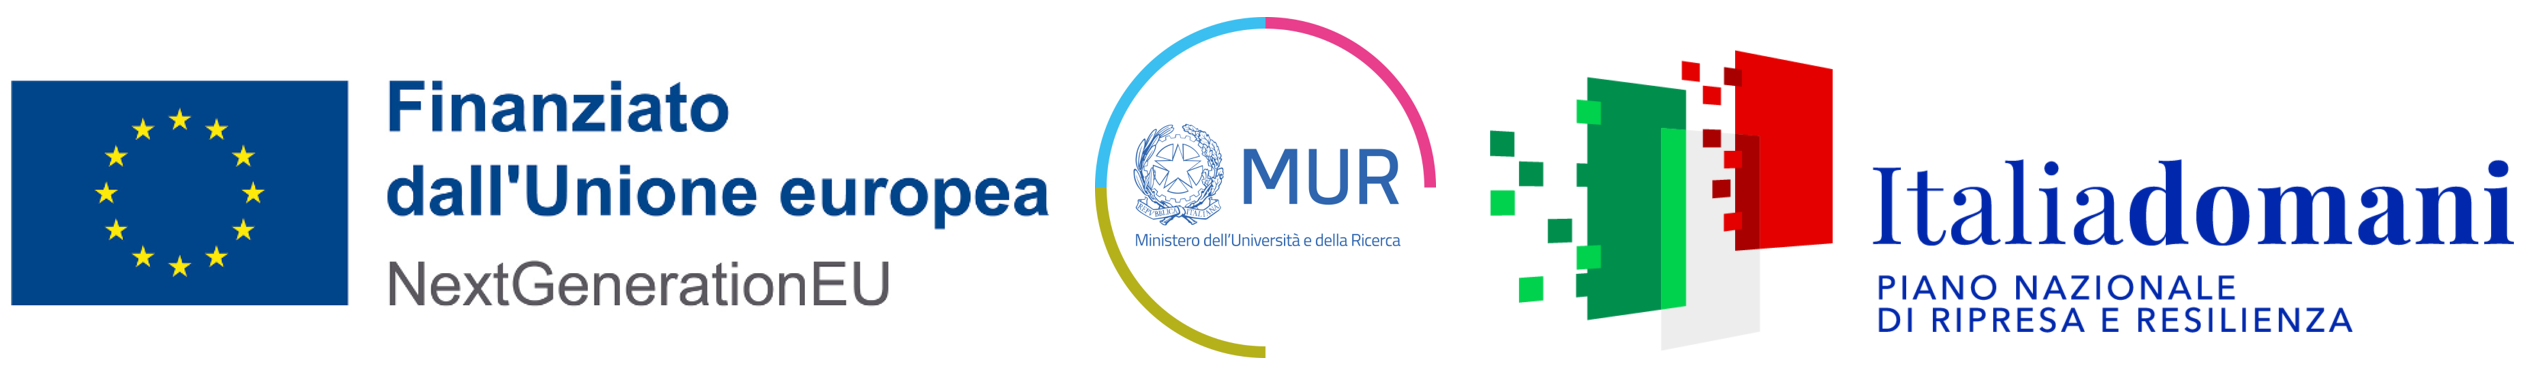 Logo_Mur+NextGenEU+ItaliaDomani